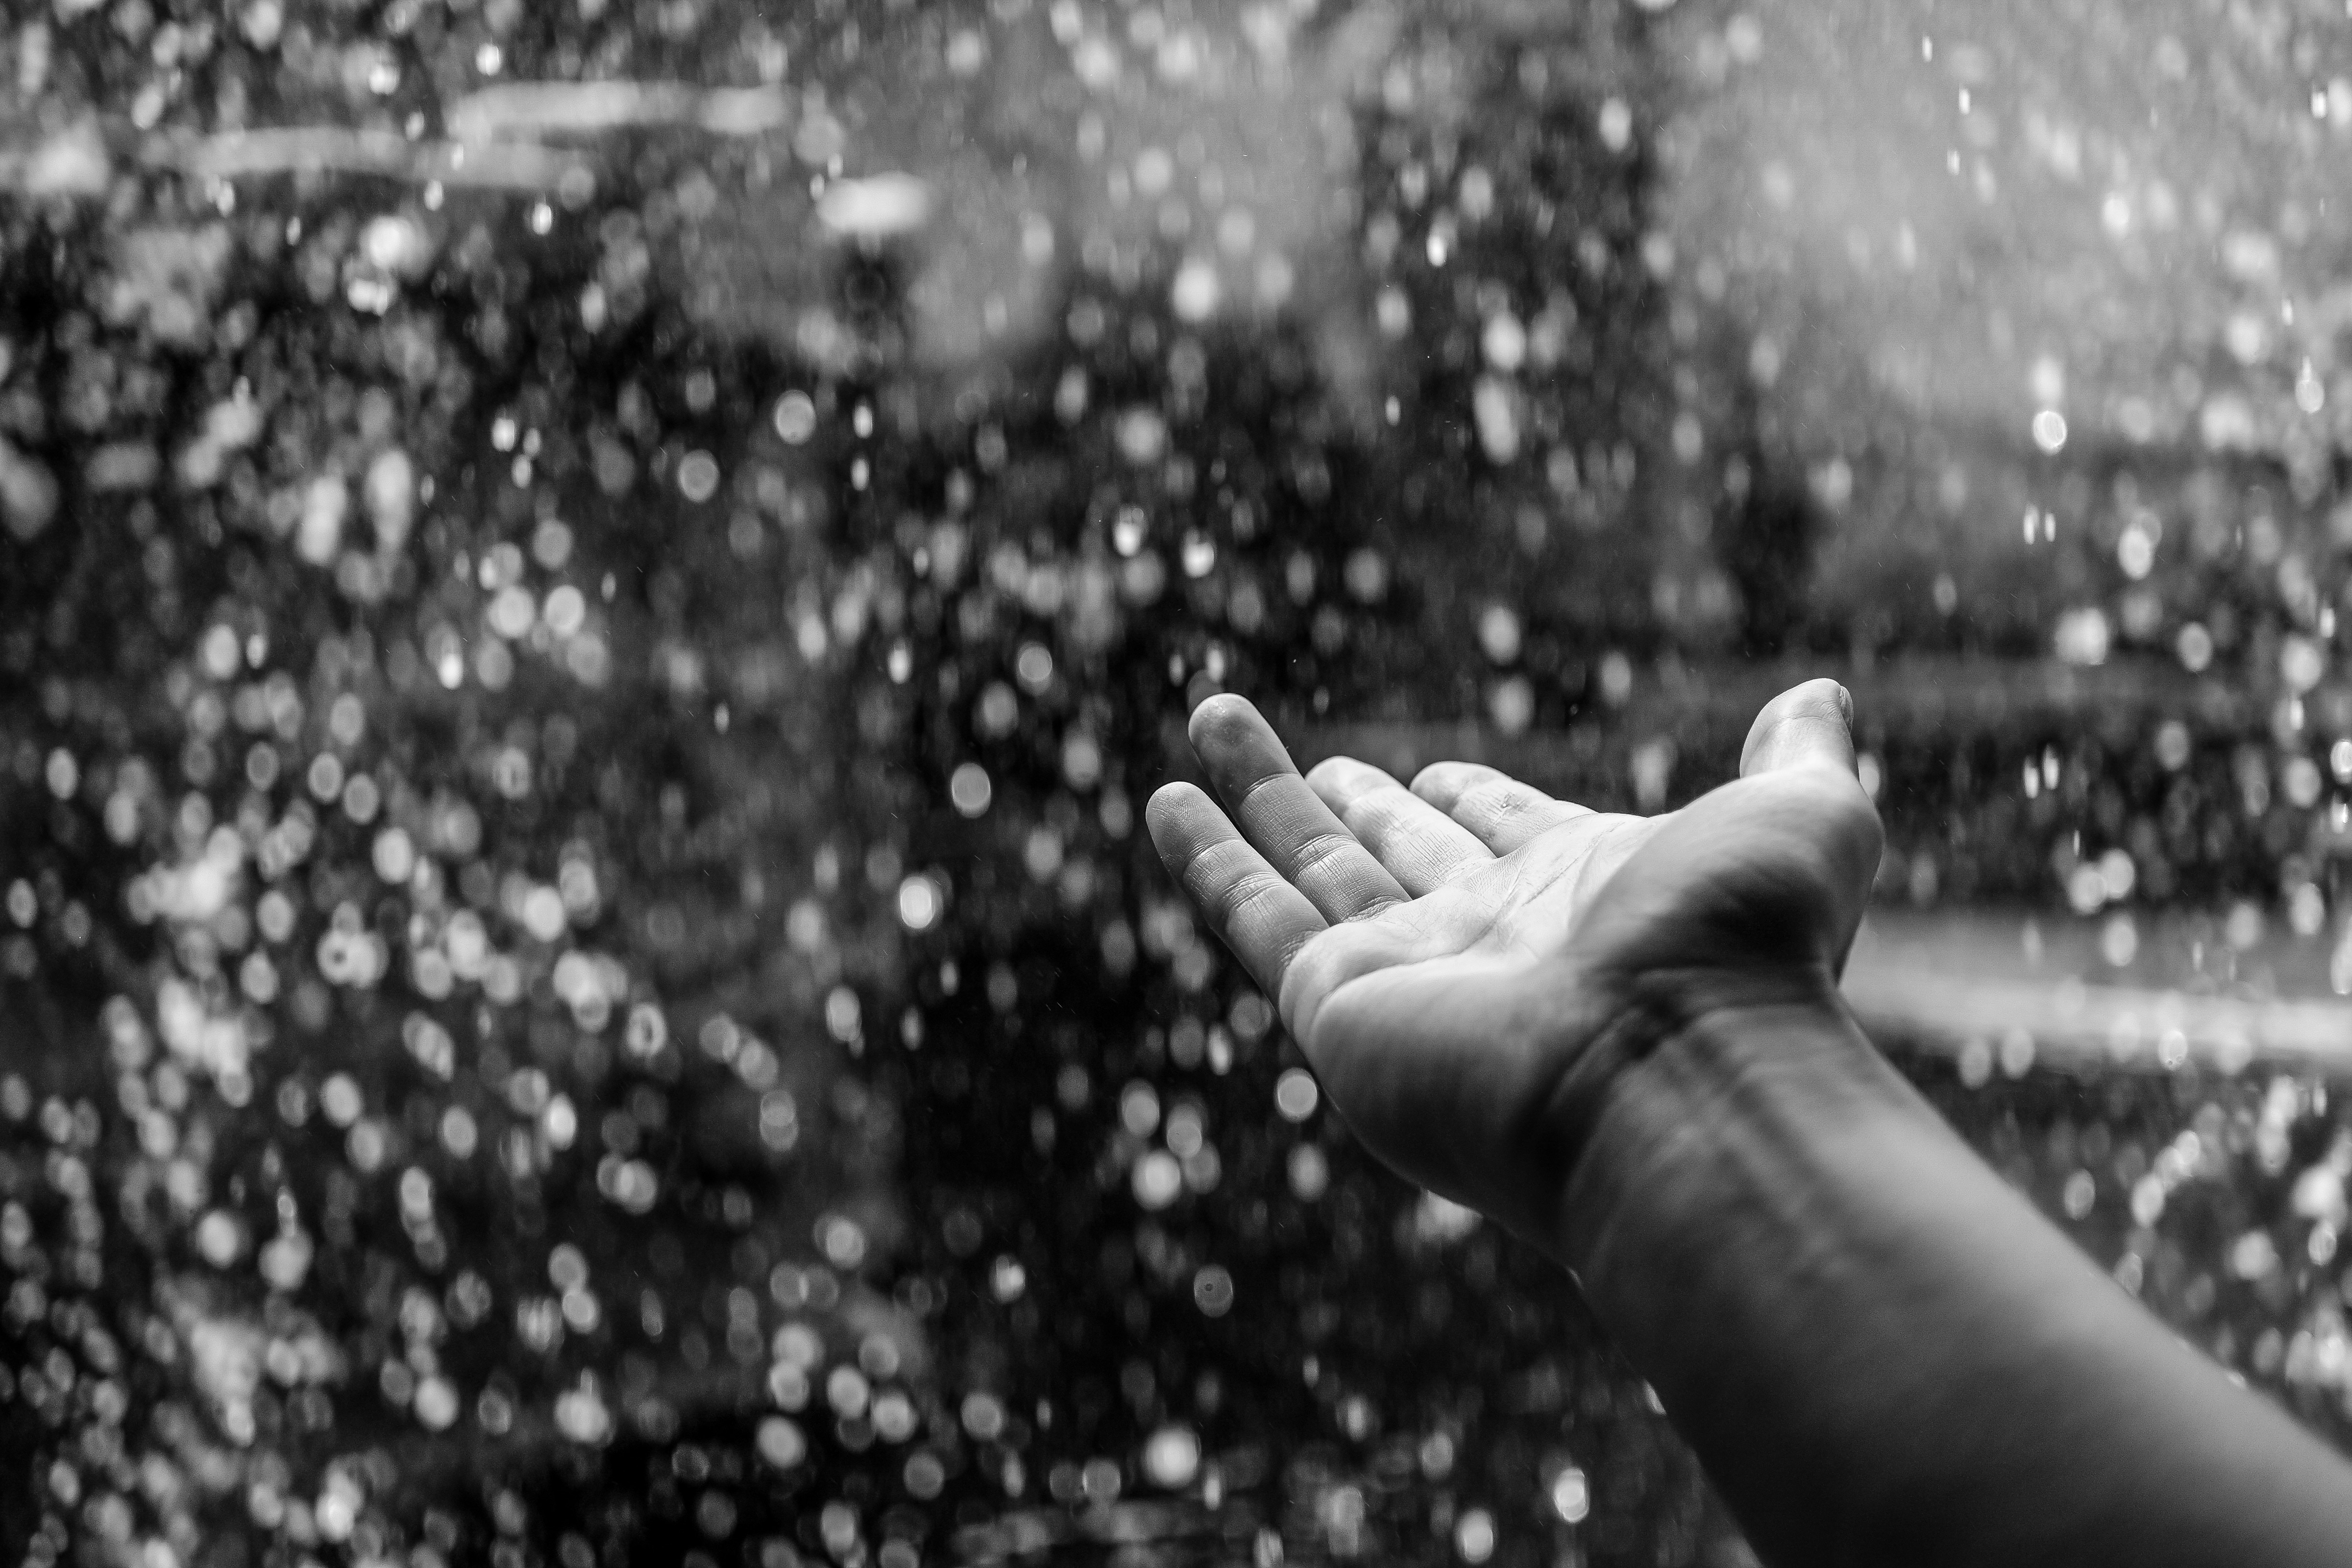 grey scale photo of human hand under the rain